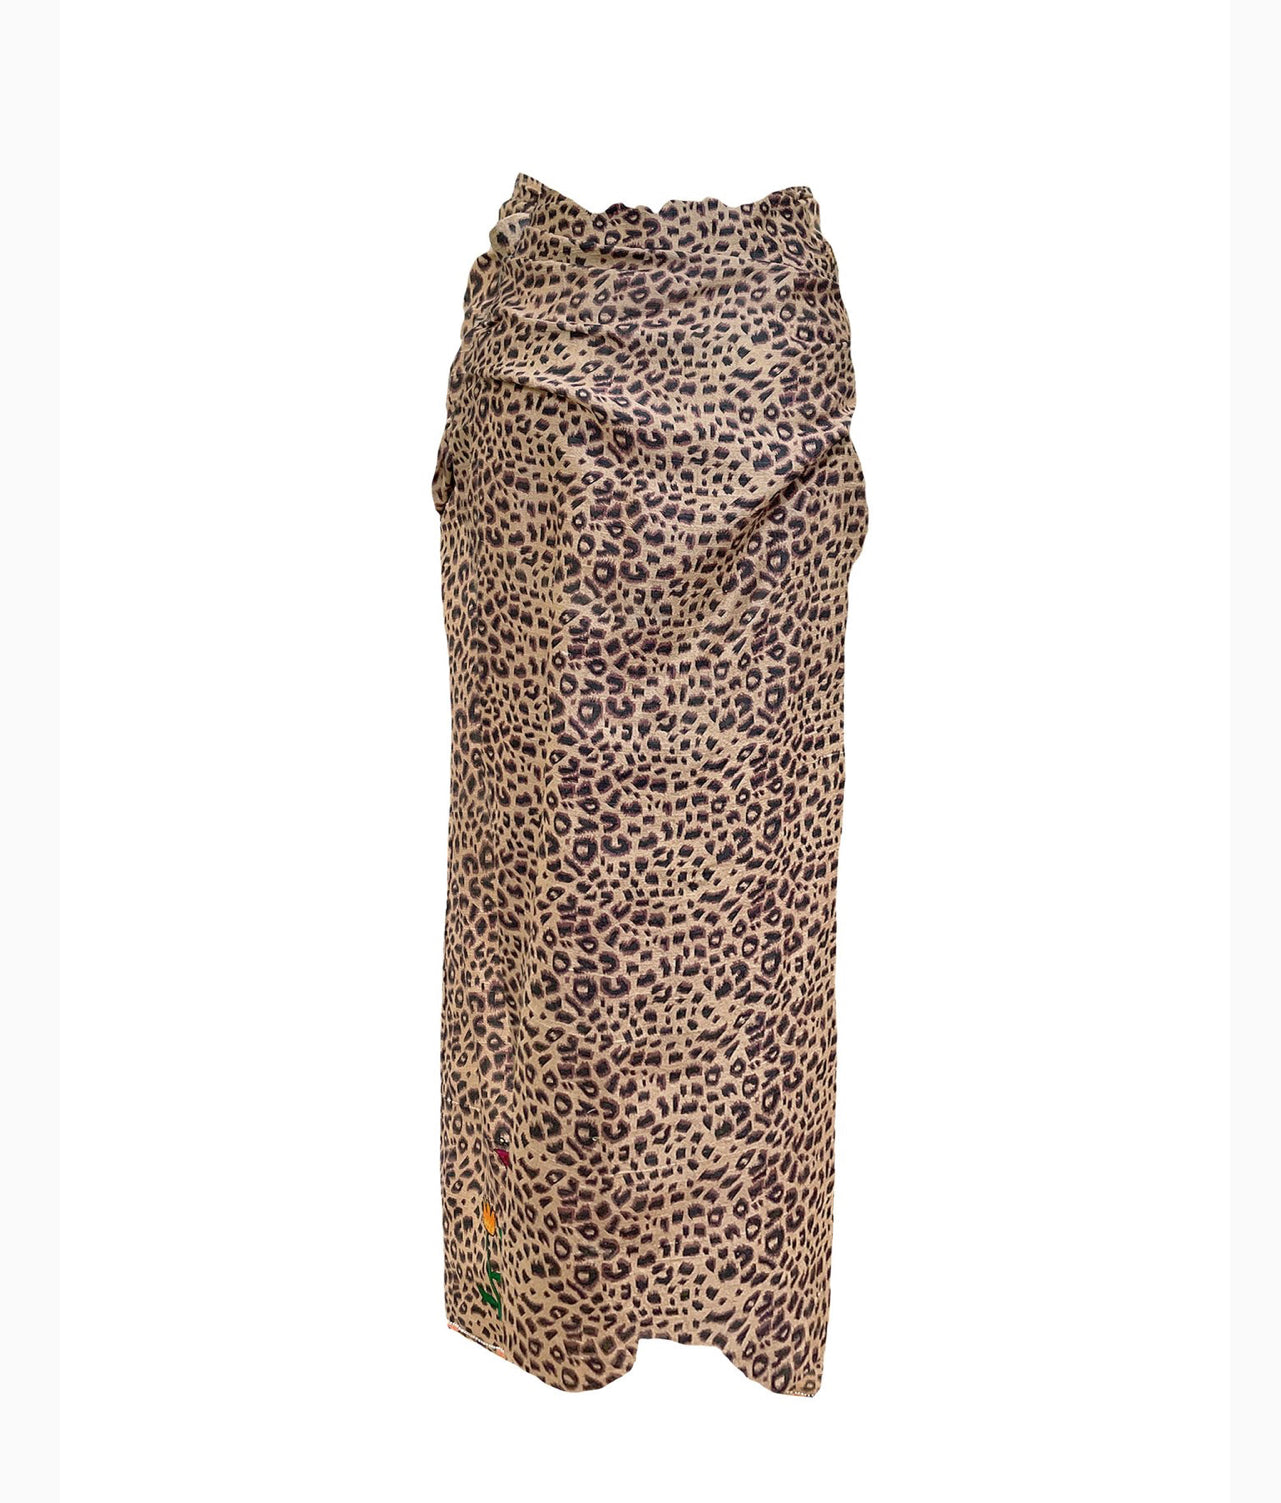 Monoki Leo Leopard Skirt - The Posh Peacock